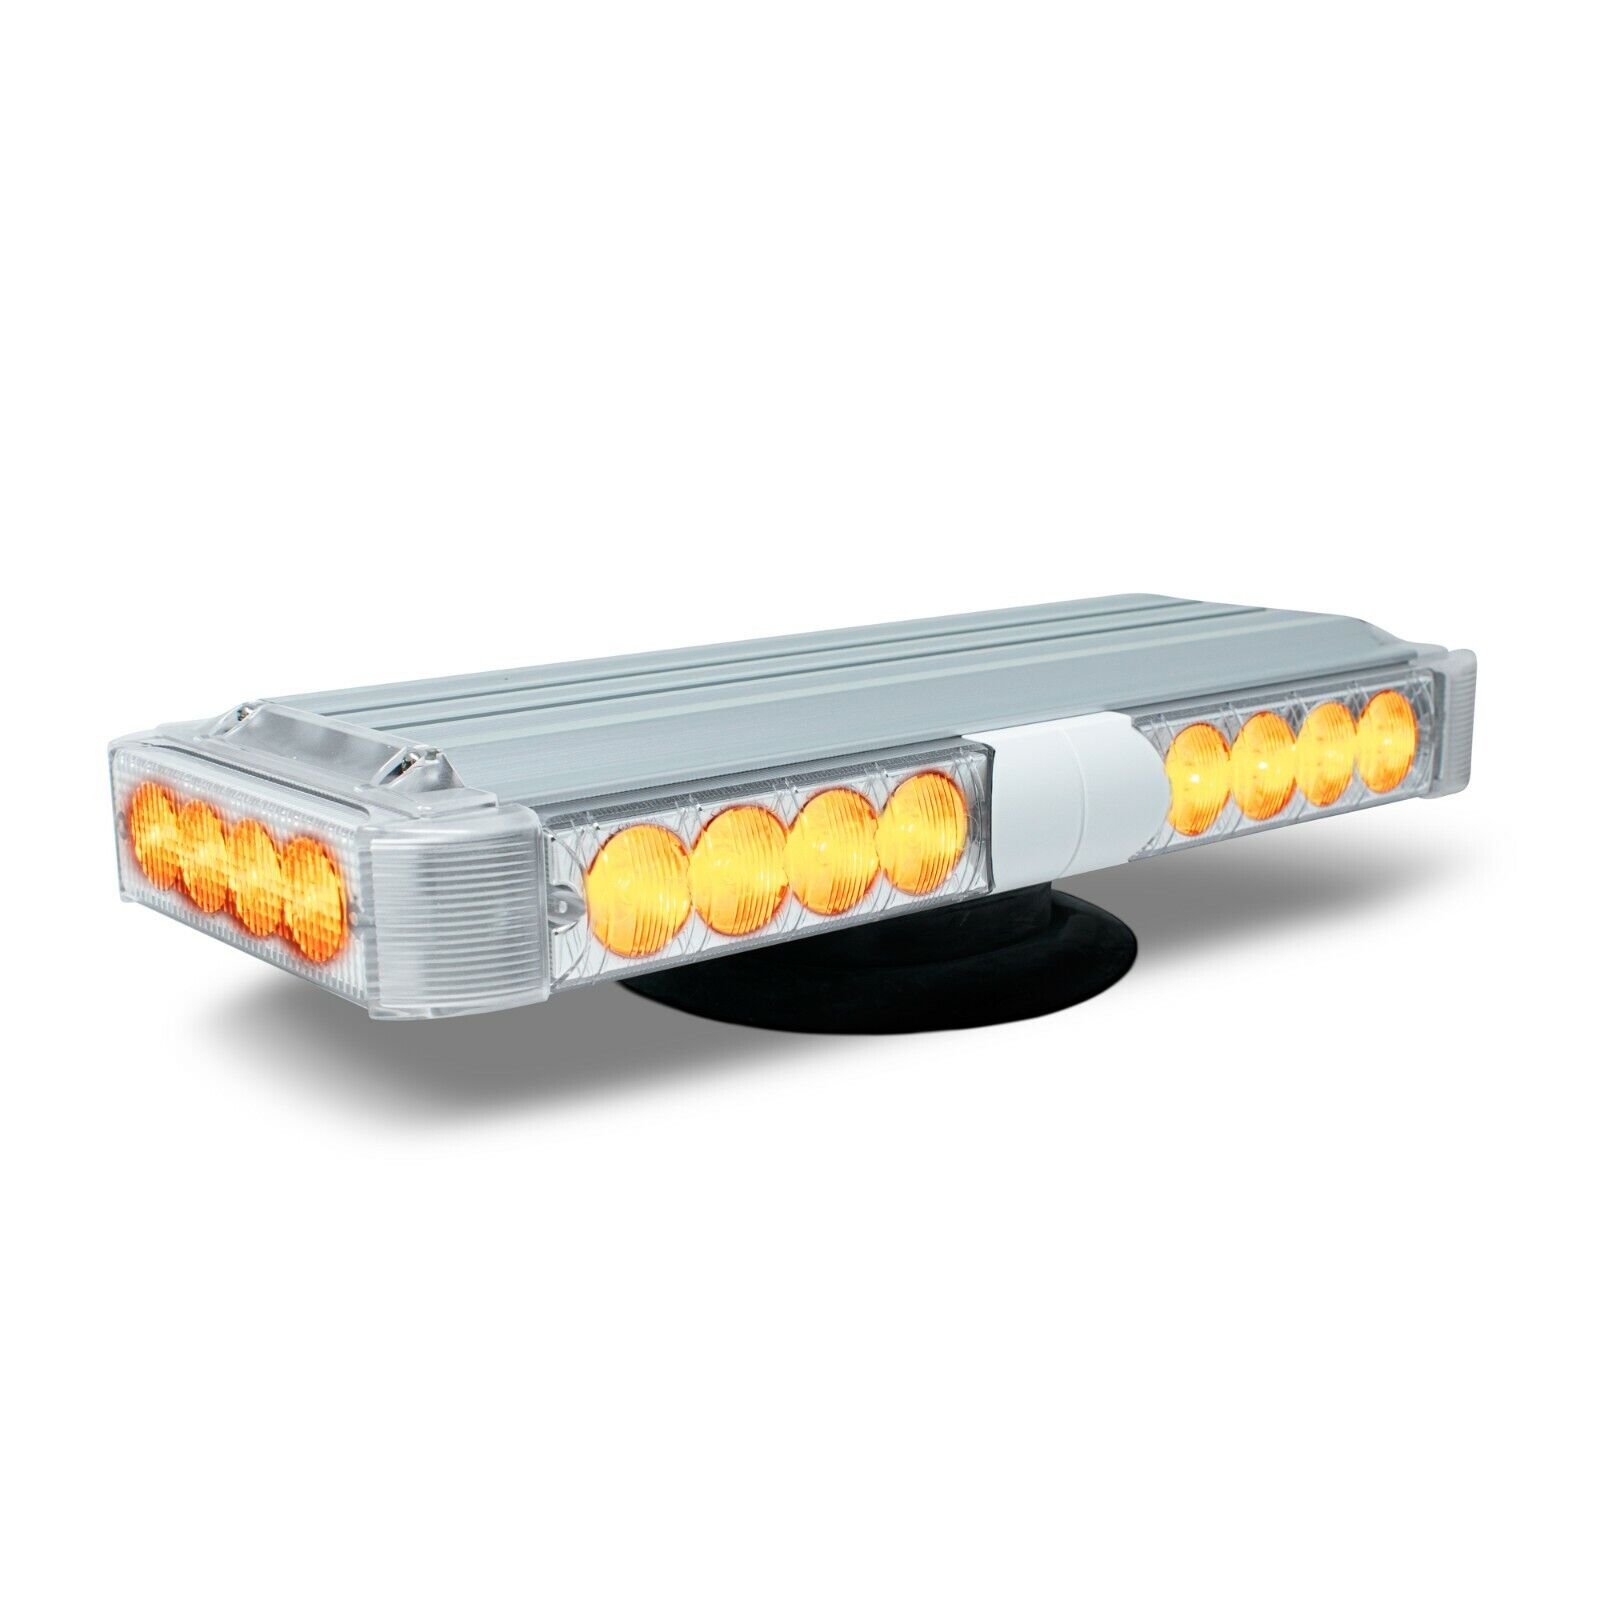 Magnet Mounted Amber LED Warning Light With 12 Flash Patterns 10-30 Volt DC